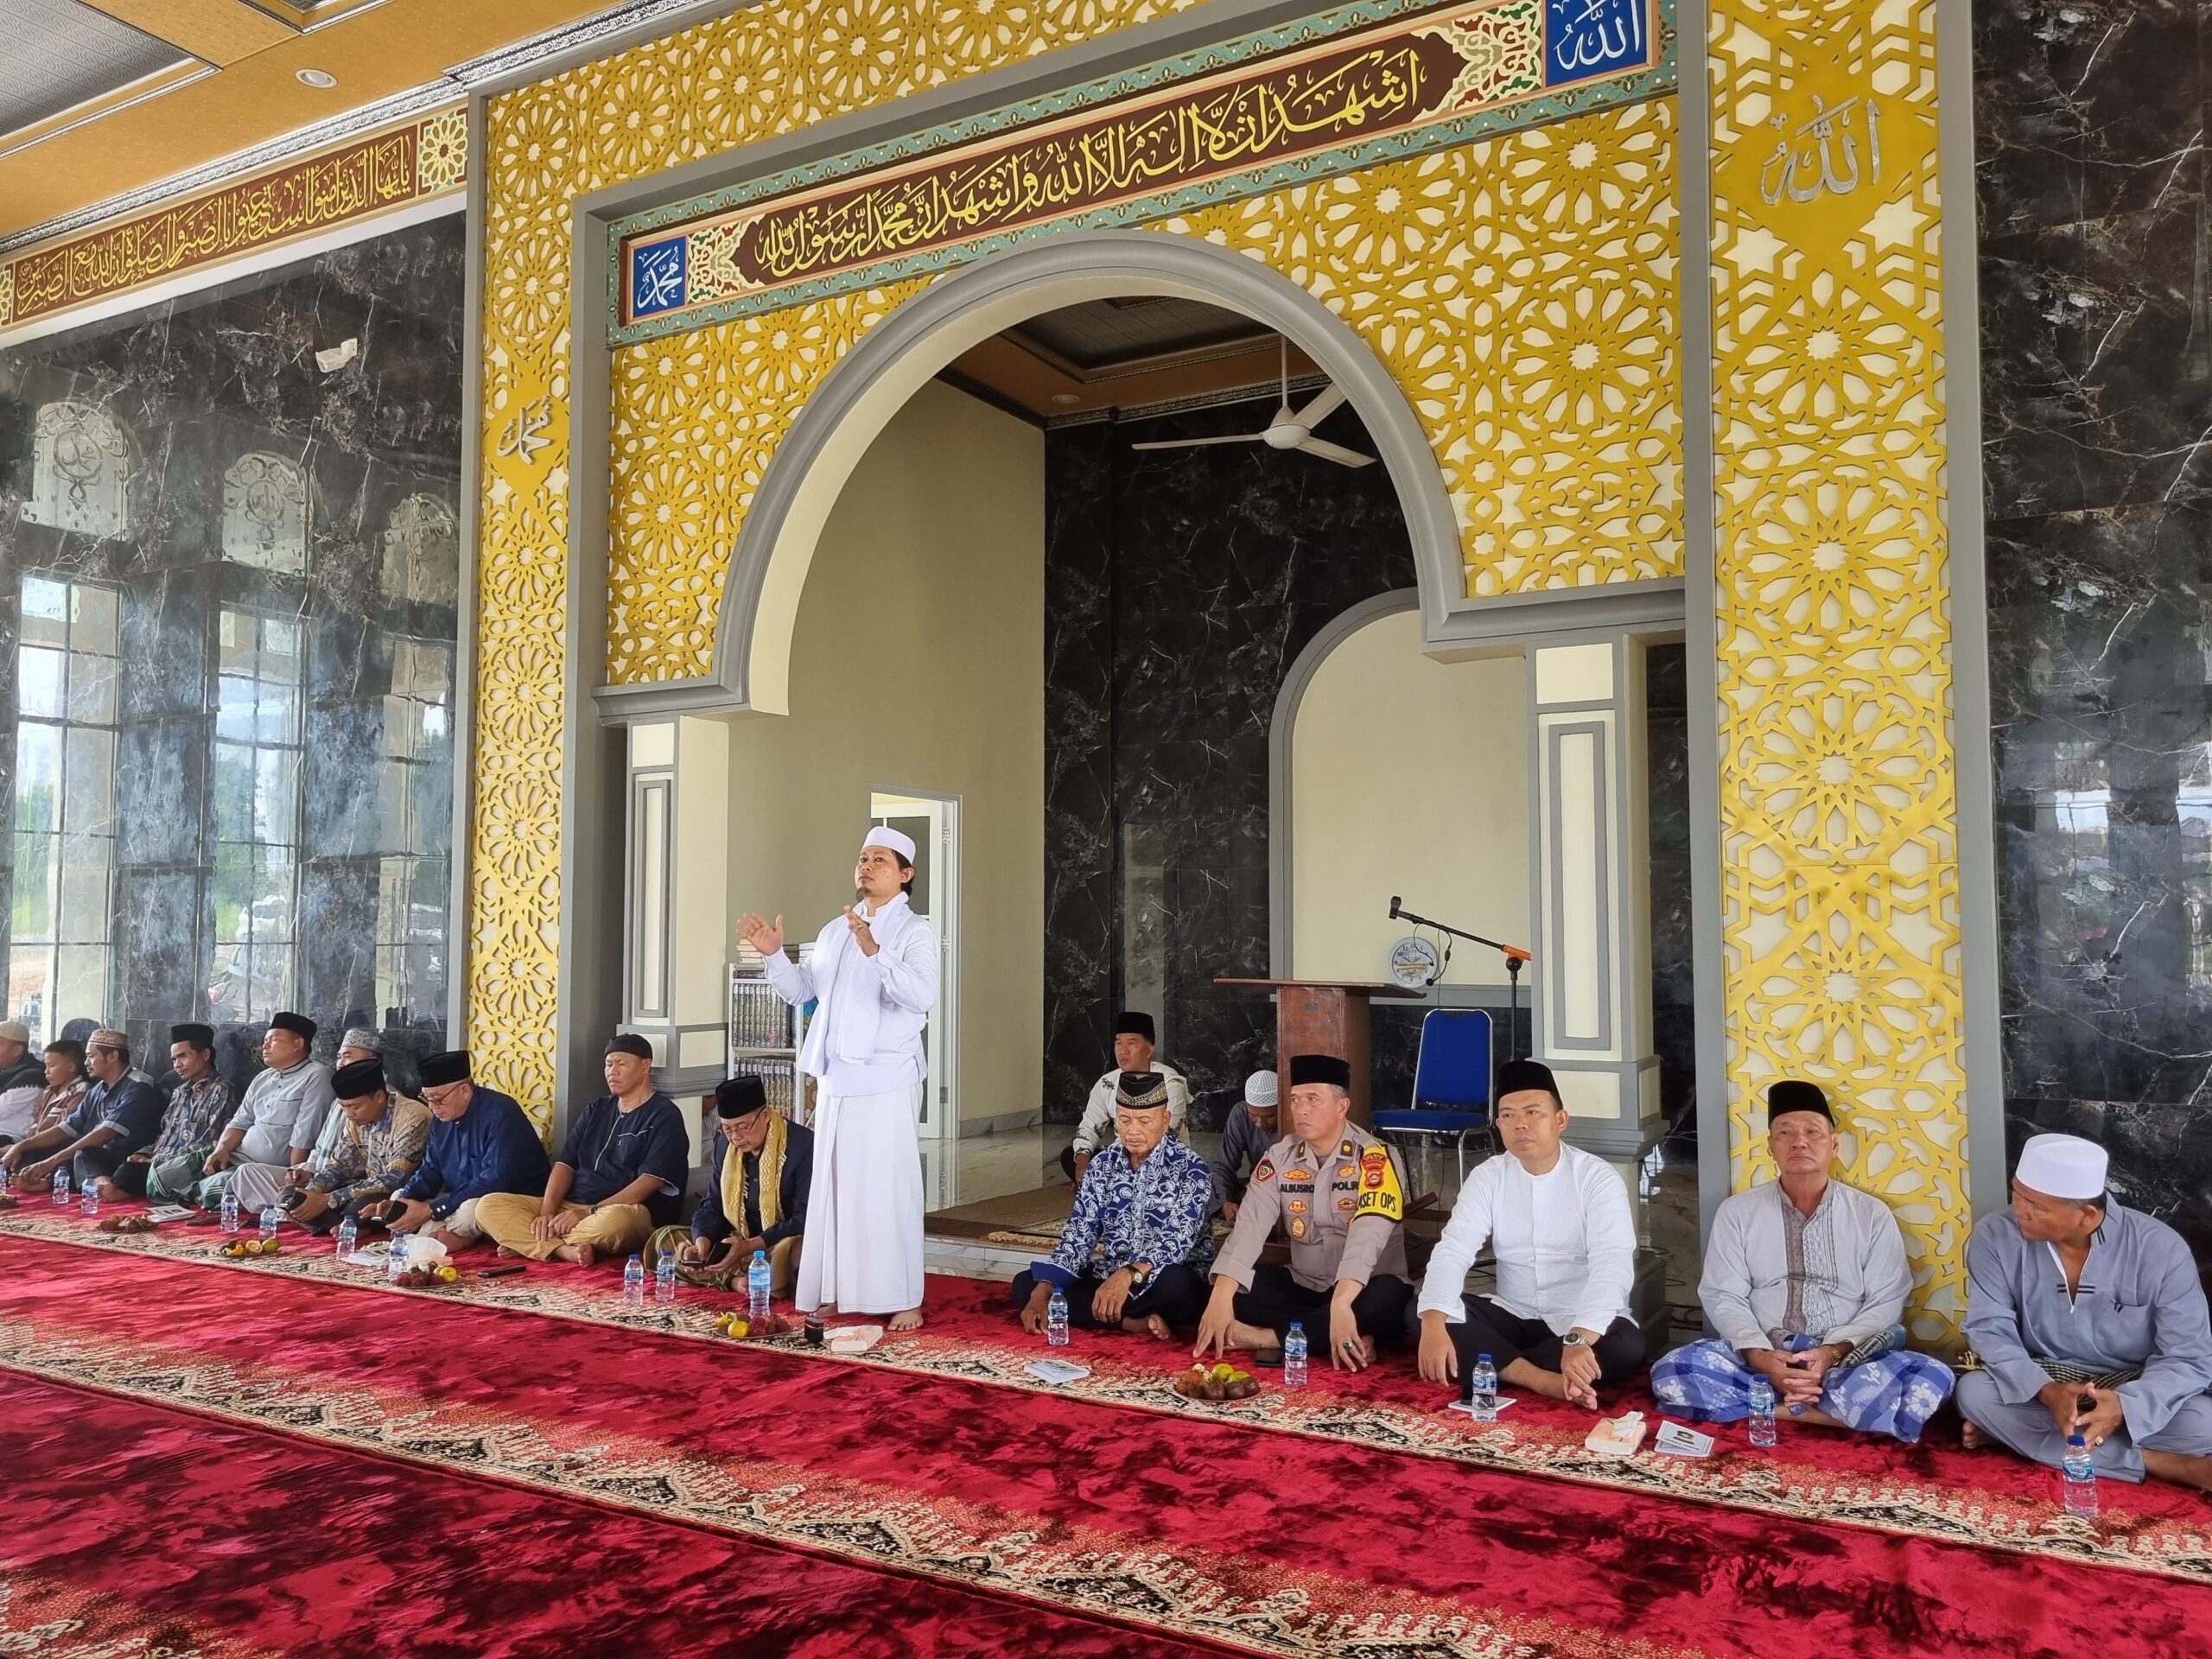 Kapolres PALI AKBP Khairu Nasrudin, S.I.K, M.H, Menghadiri Acara Syukuran Masjid AS''Saidiyah